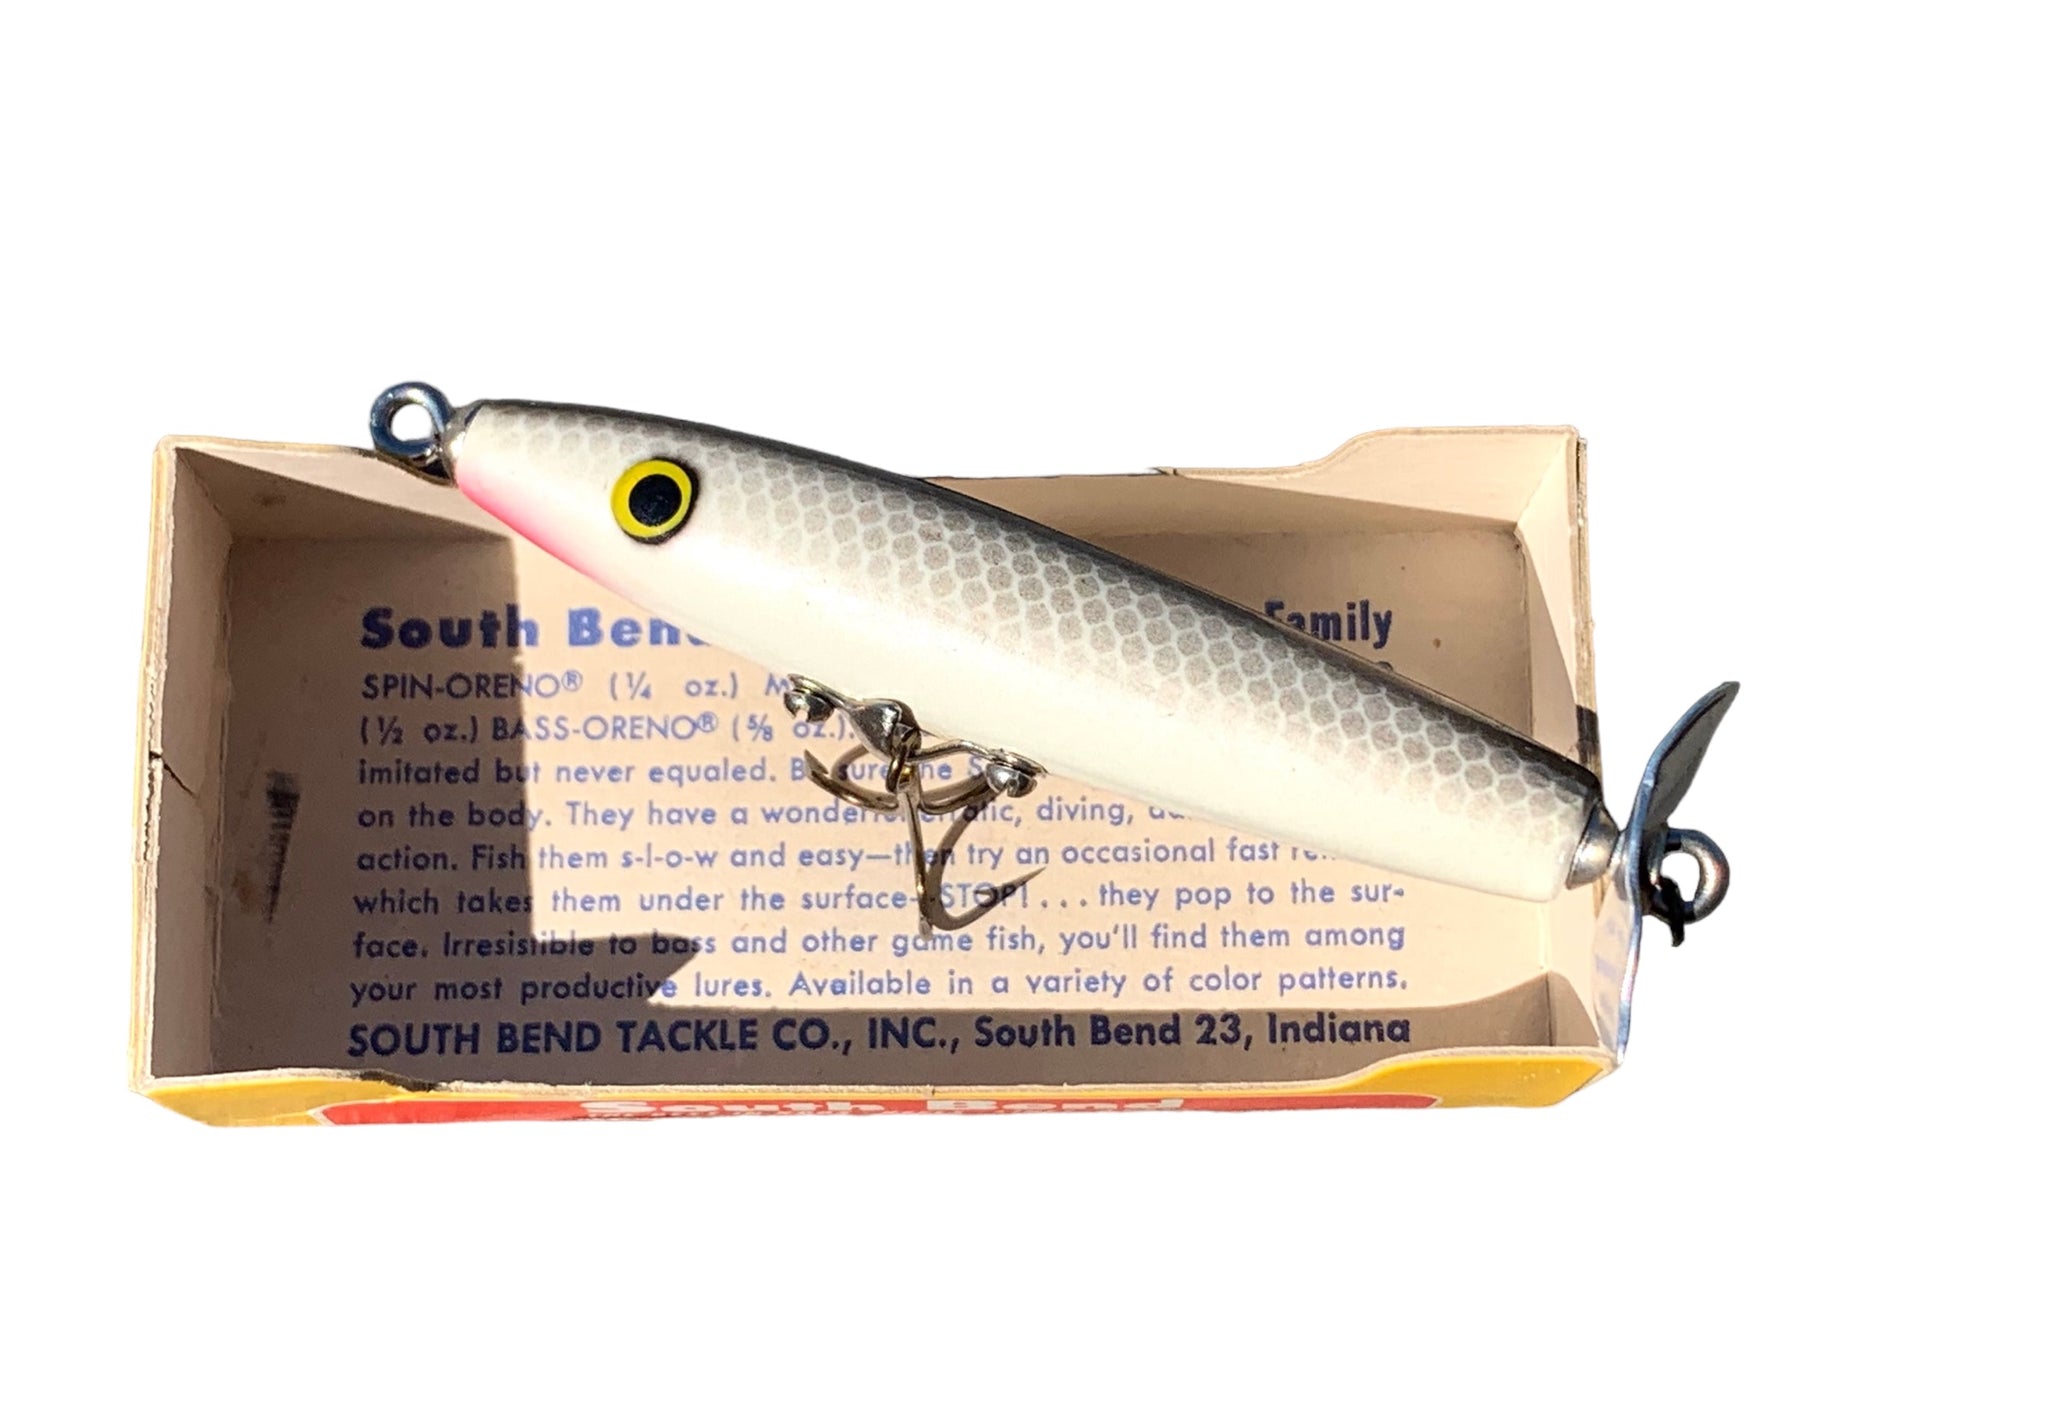 SOUTH BEND TOP-ORENO Fishing Lure w/ Original Box • 964 GM – Toad